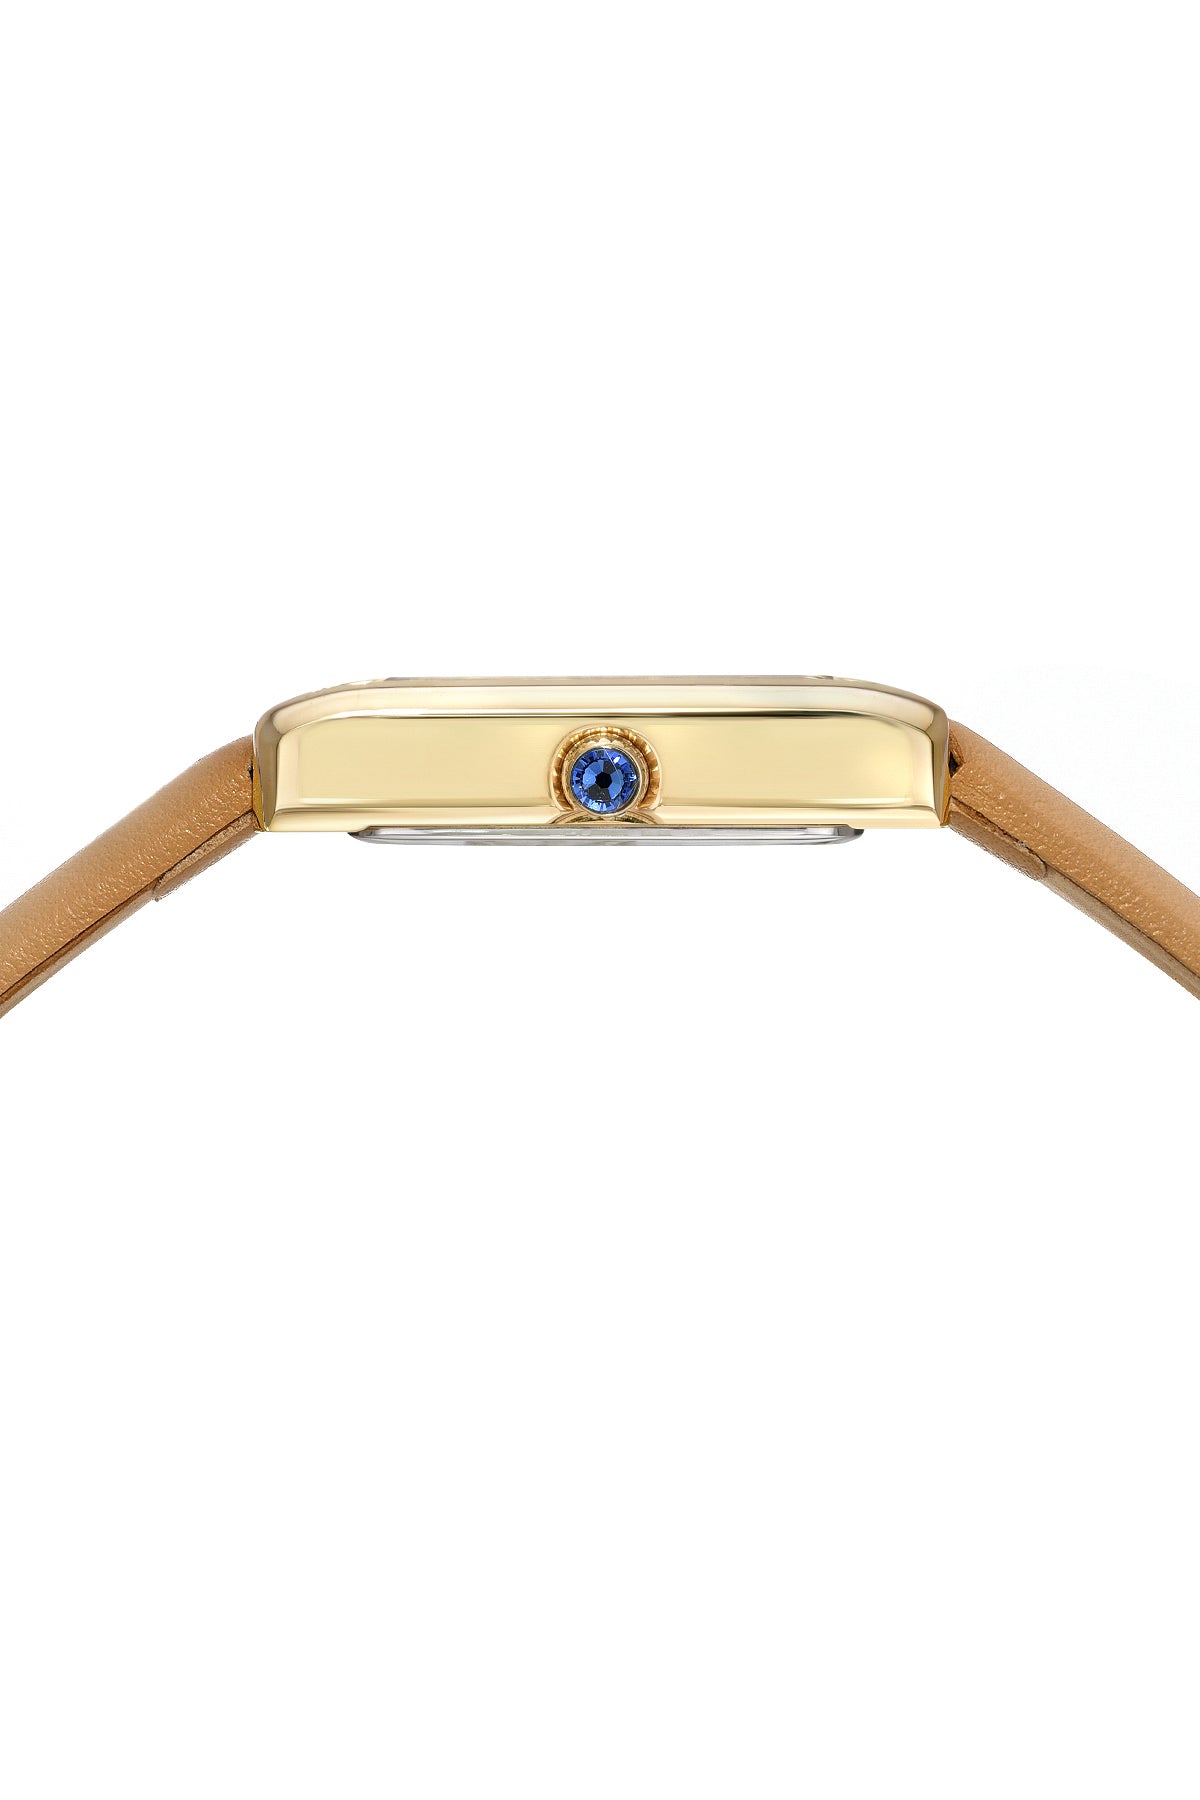 Porsamo Bleu Karolina Luxury Diamond Rectangular Women's Genuine Leather Band Watch, Gold, Cognac 1082CKAL